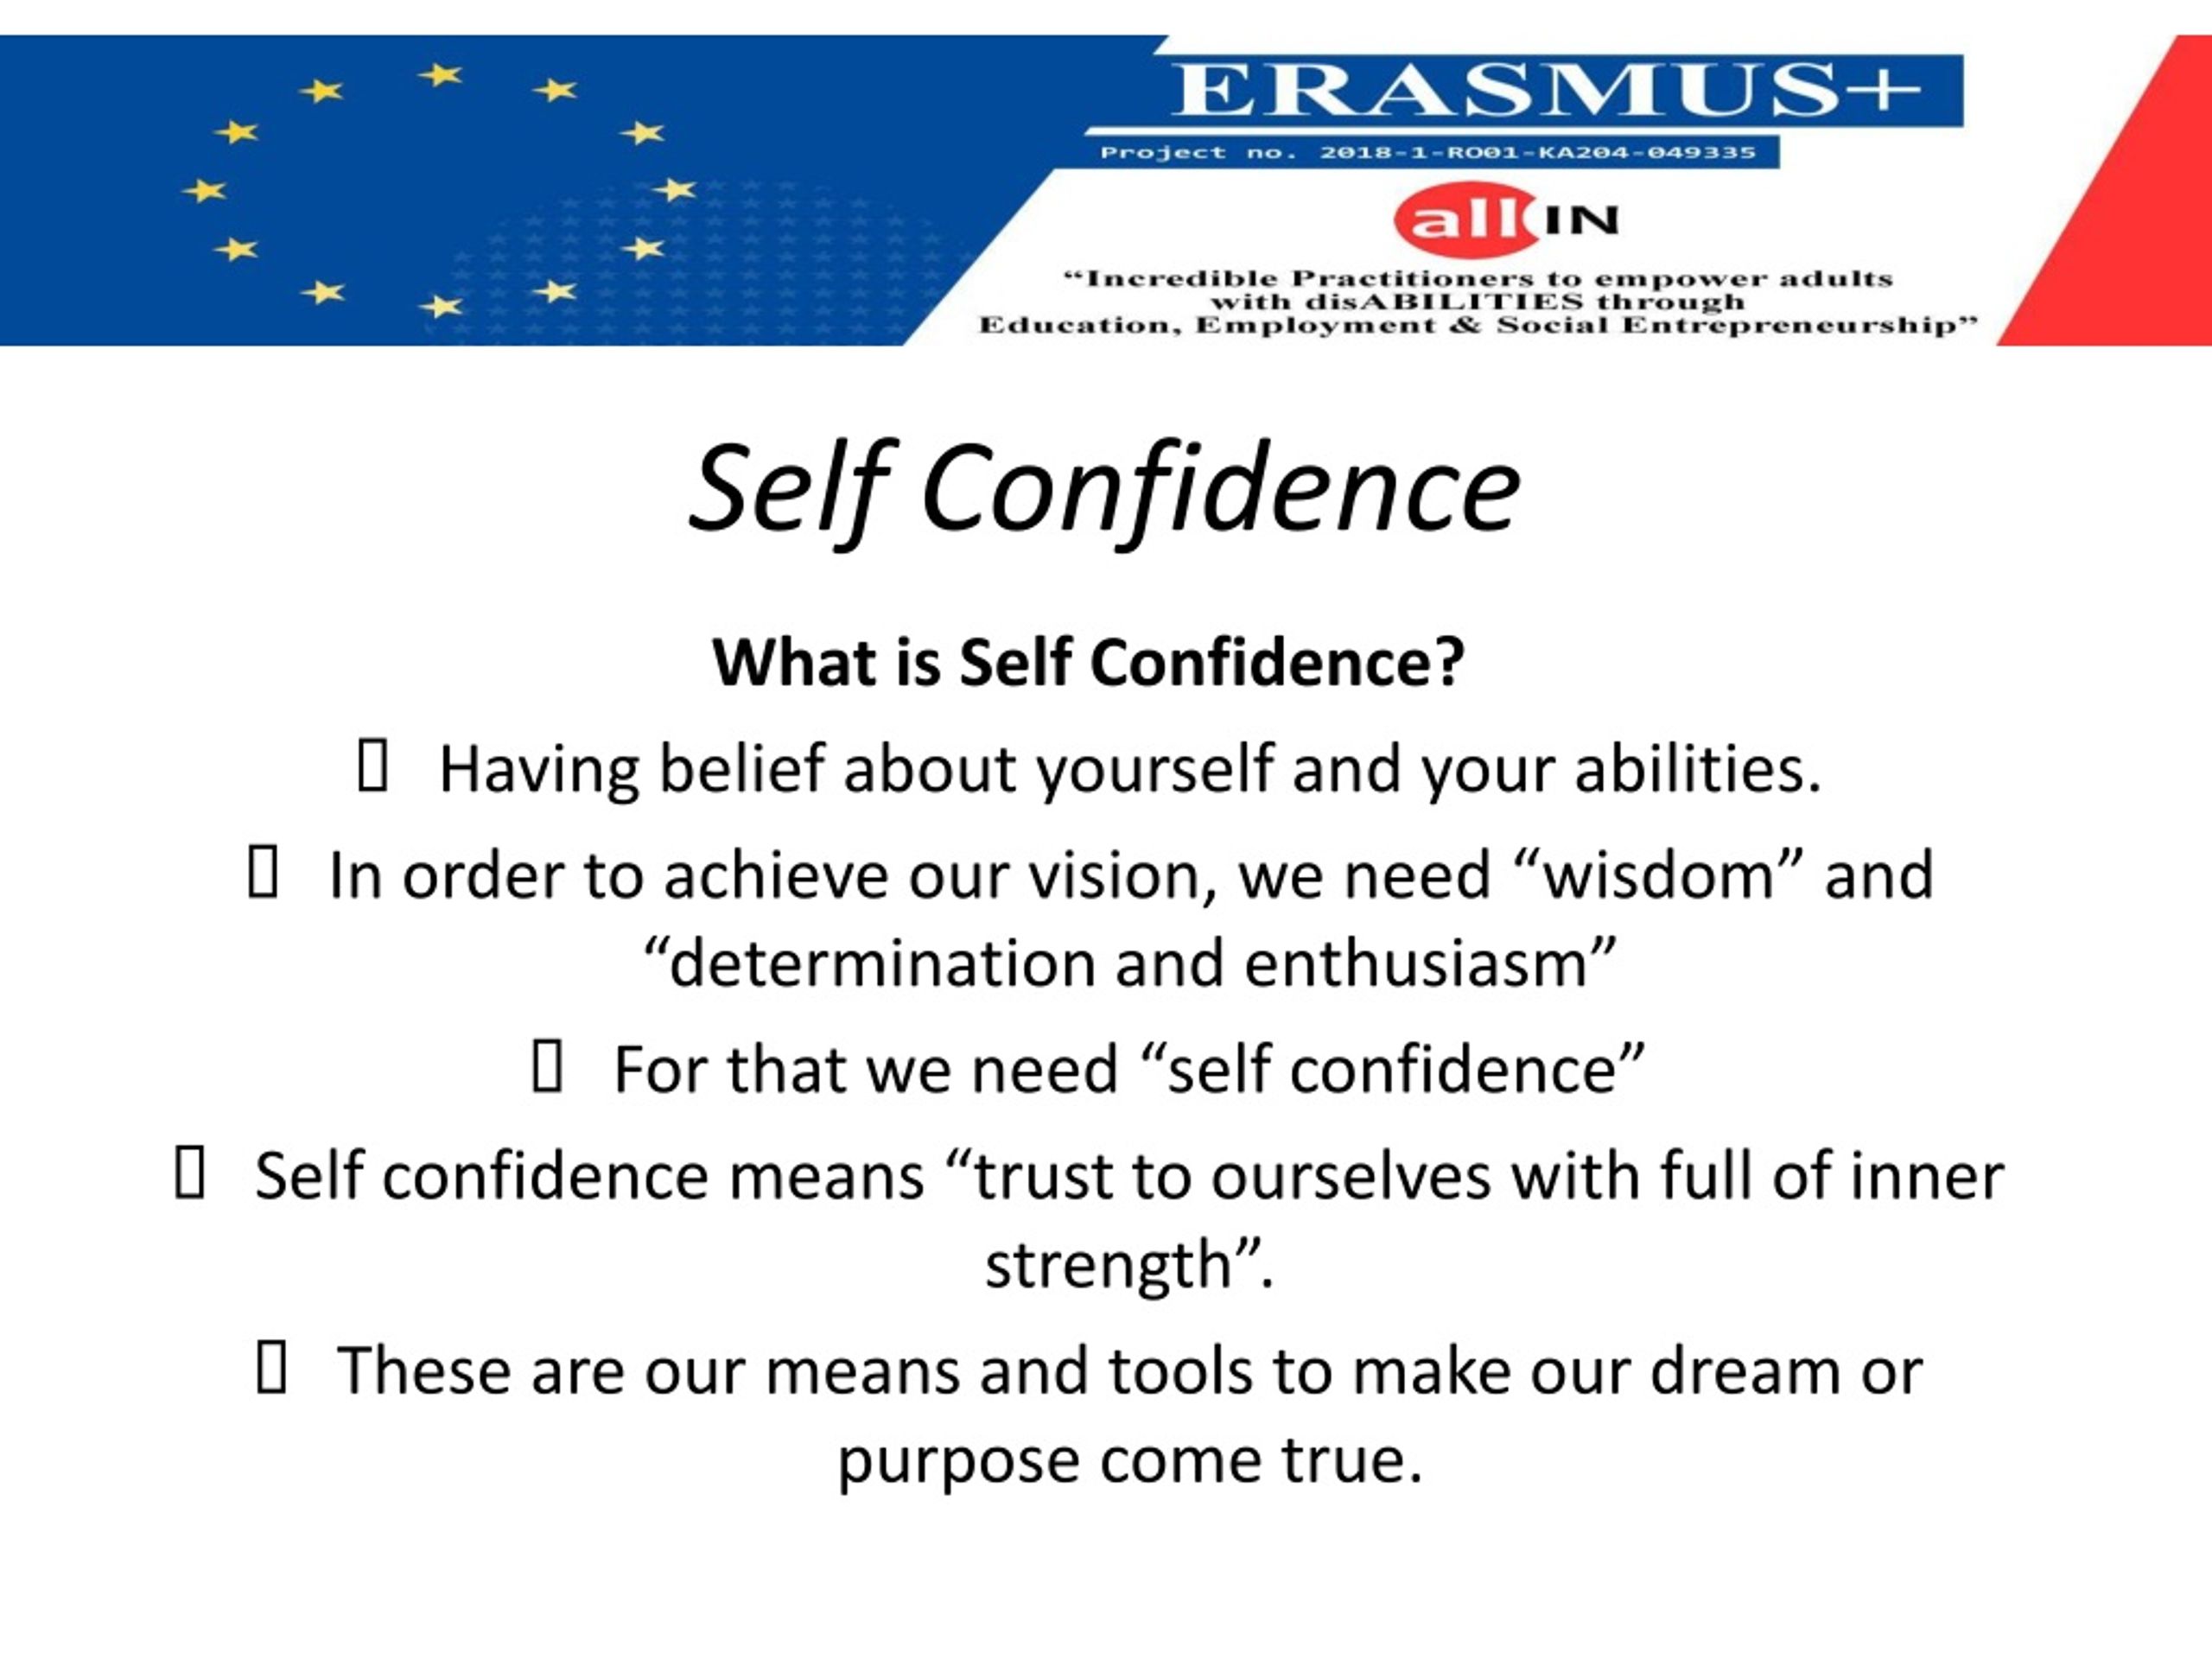 powerpoint presentation on self confidence